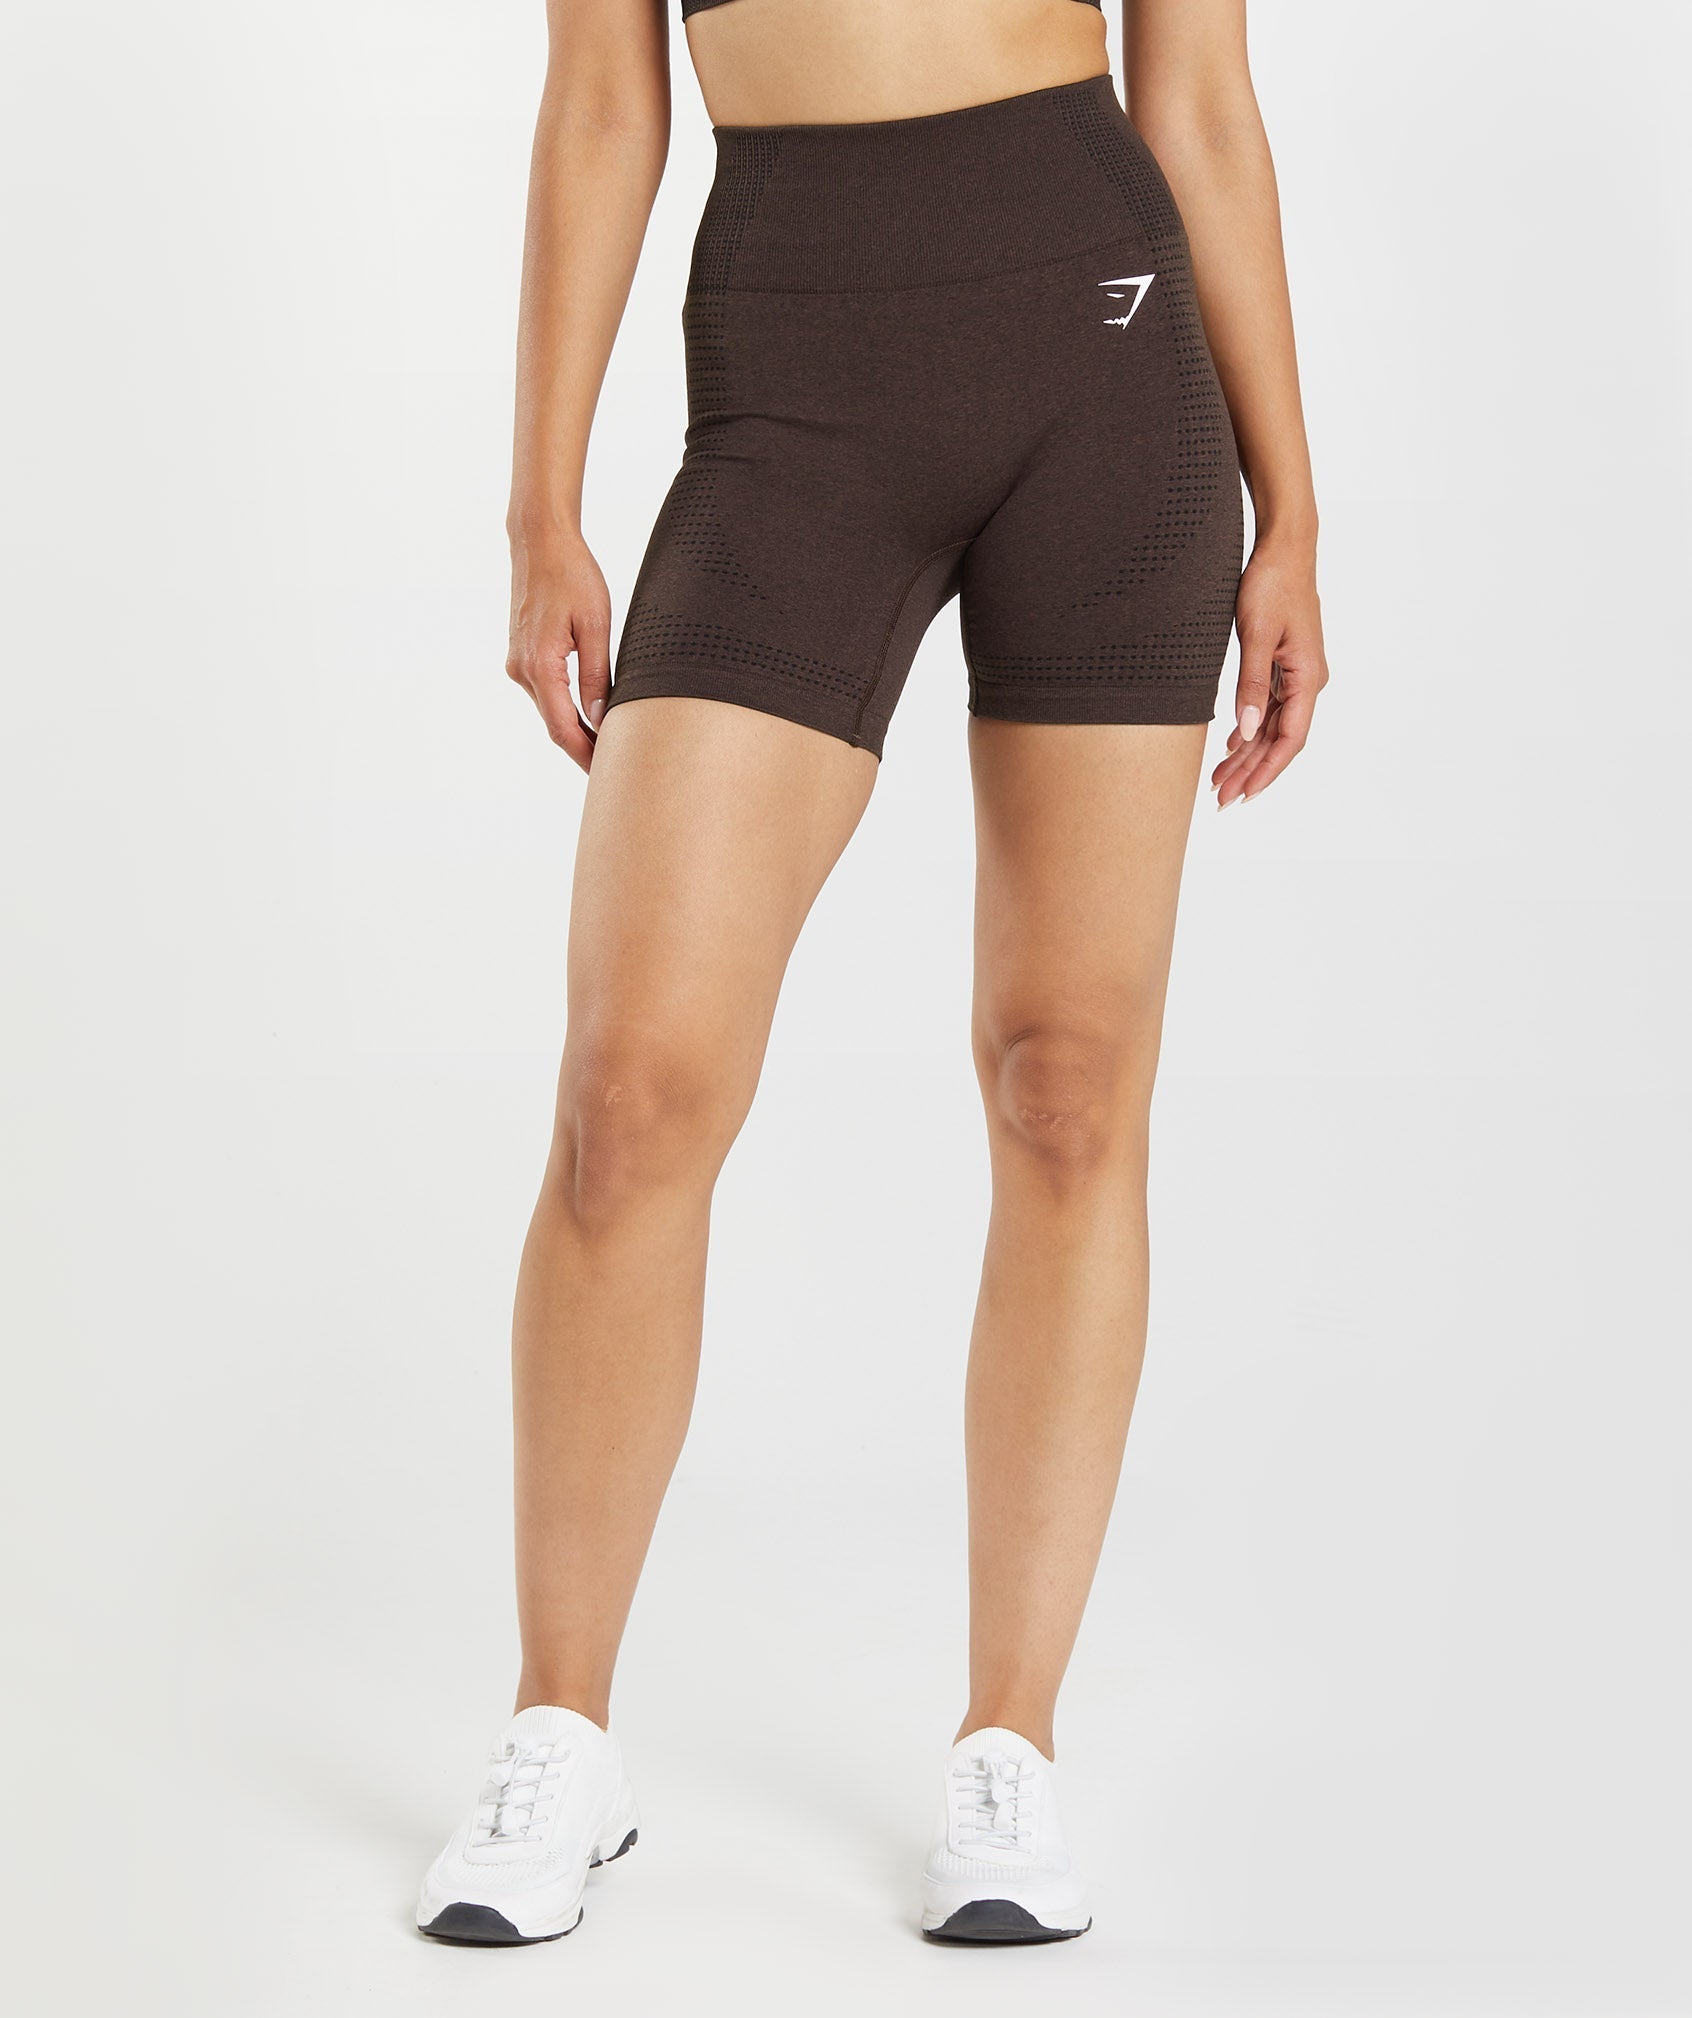 Vital Seamless 2.0 Shorts in Cherry Brown Marl